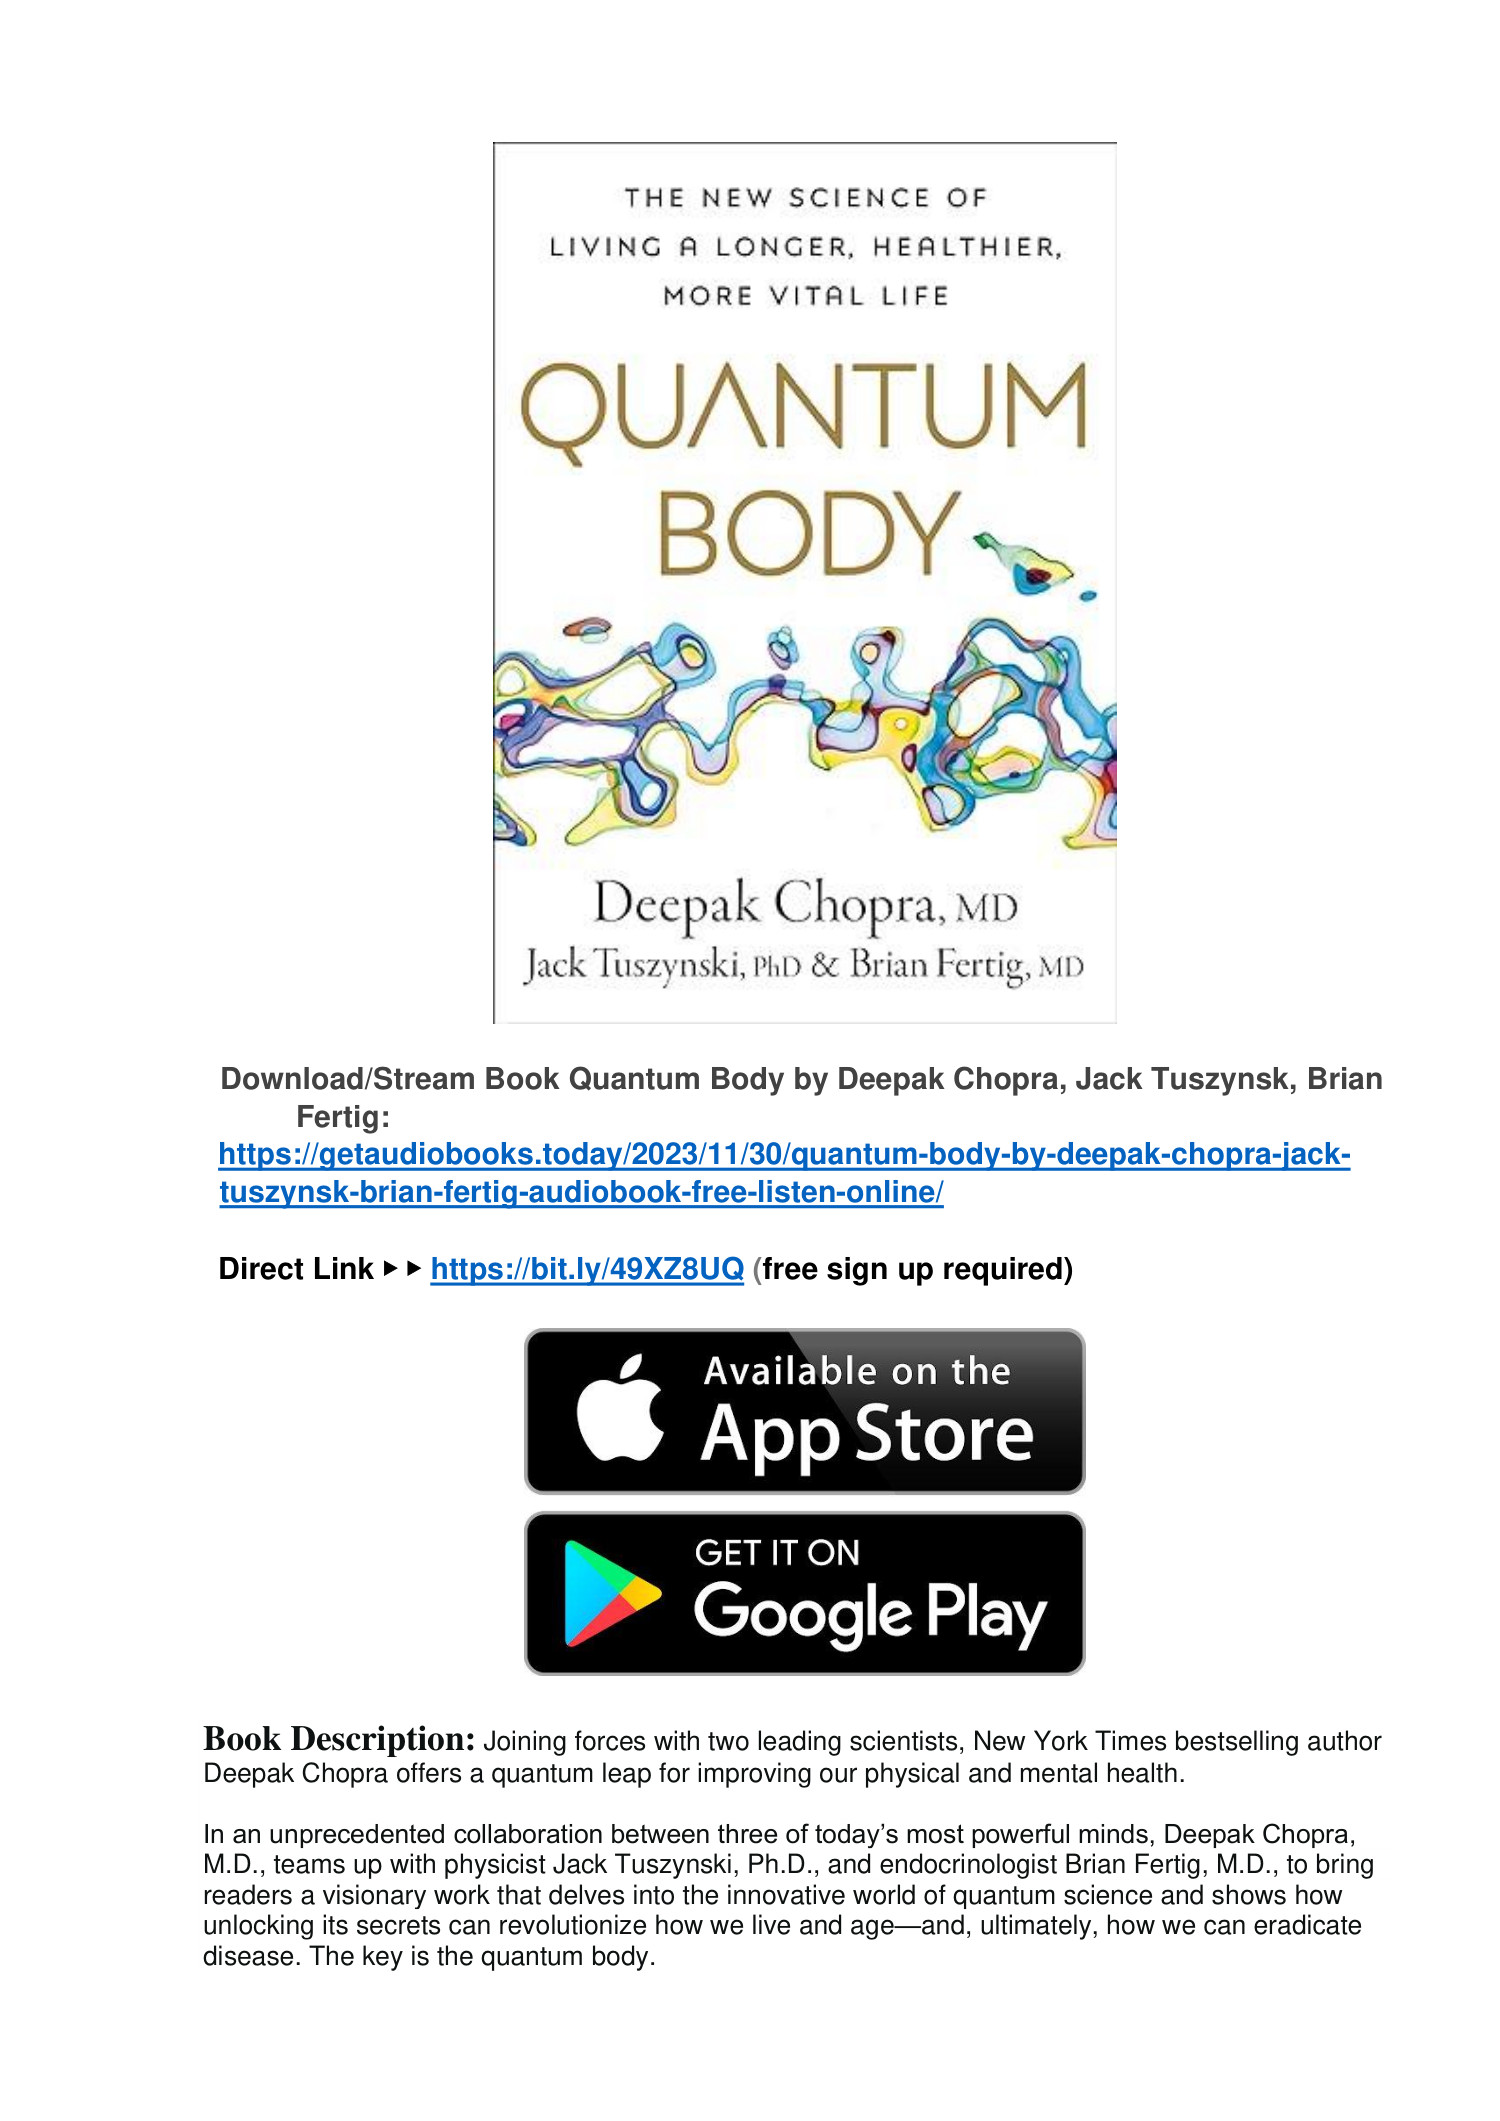 PDF Book Quantum Body by Deepak Chopra, Jack Tuszynsk, Brian Fertig  Audiobook Free Download.pdf